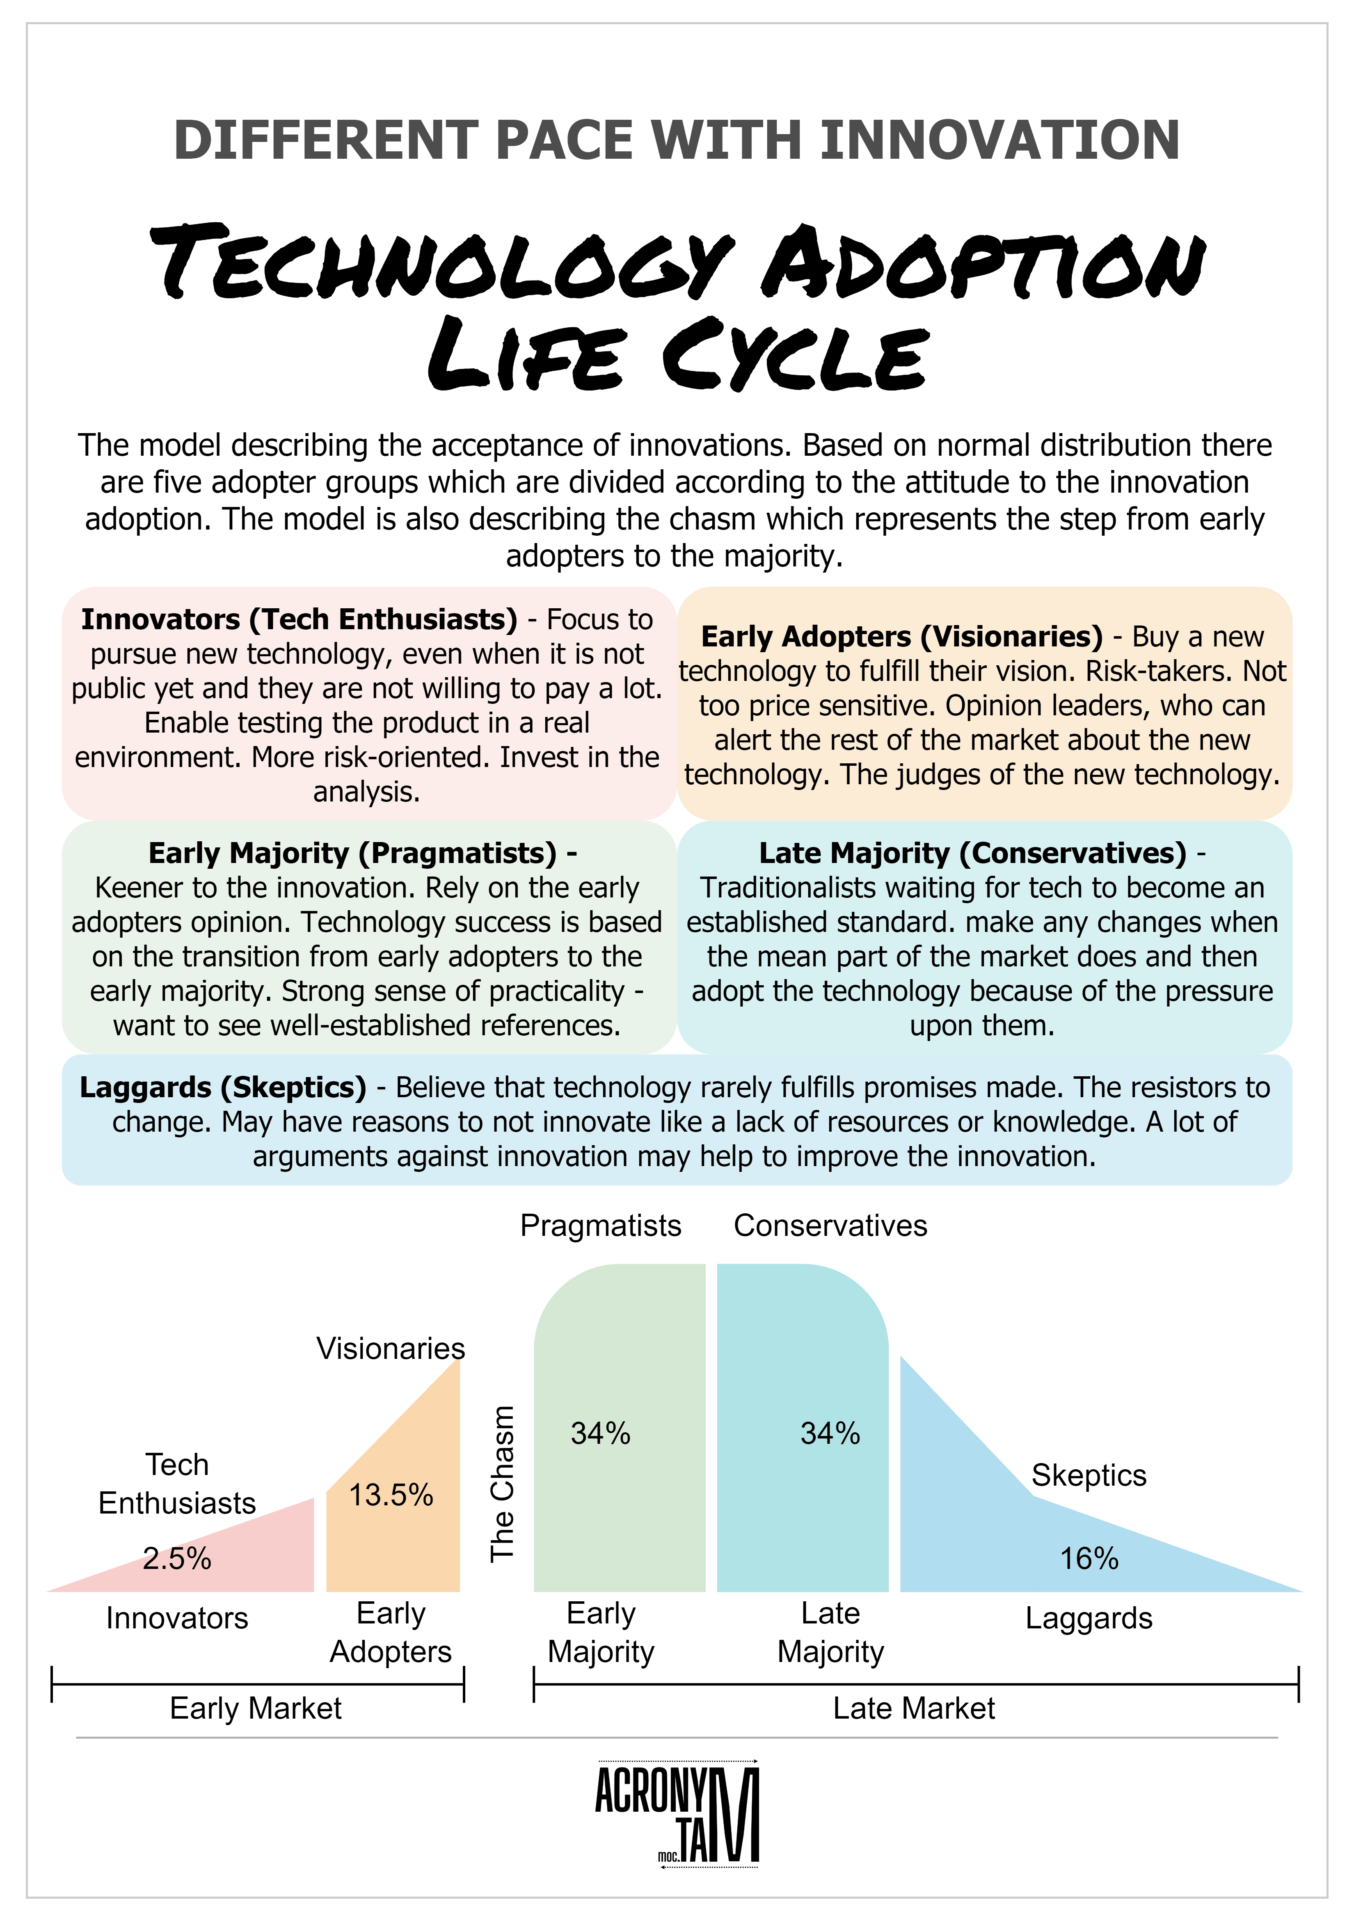 Technology Adoption Life Cycle